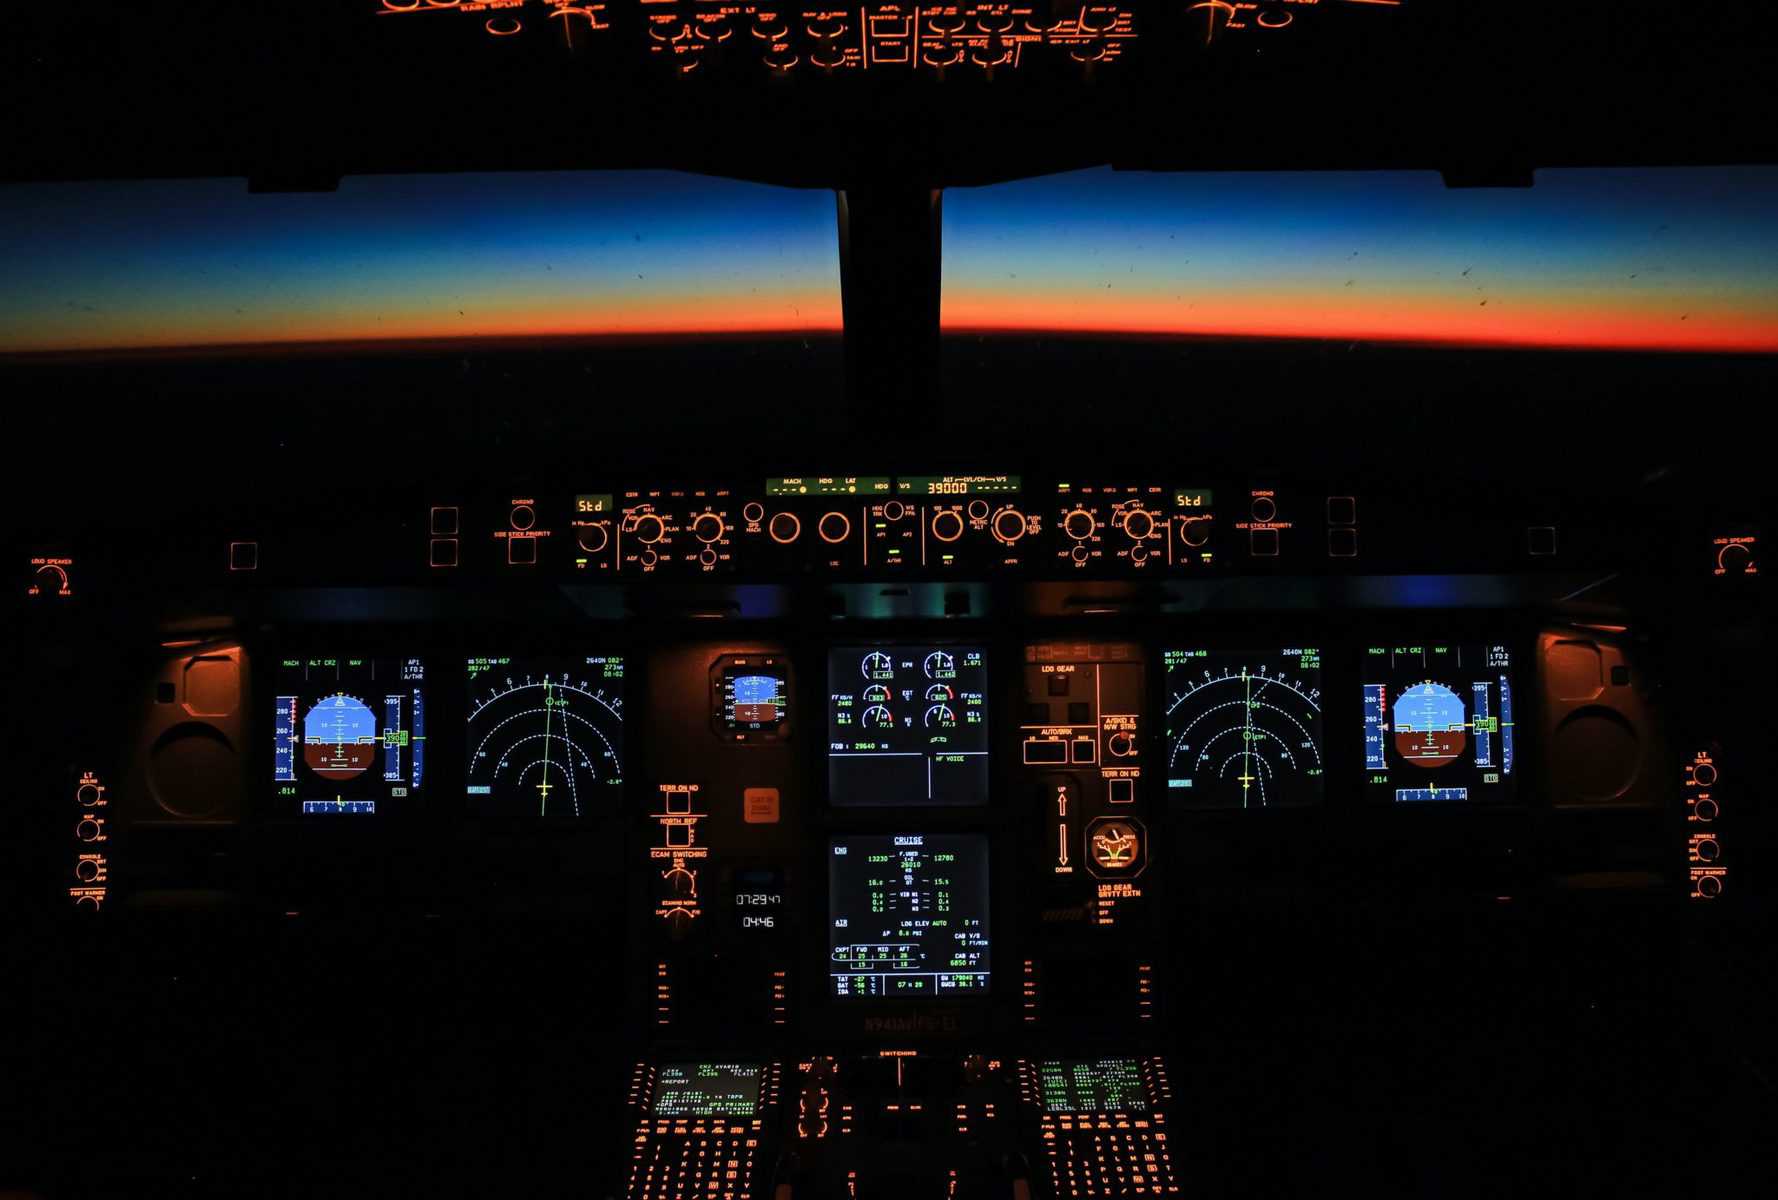 best hd flight simulator pc